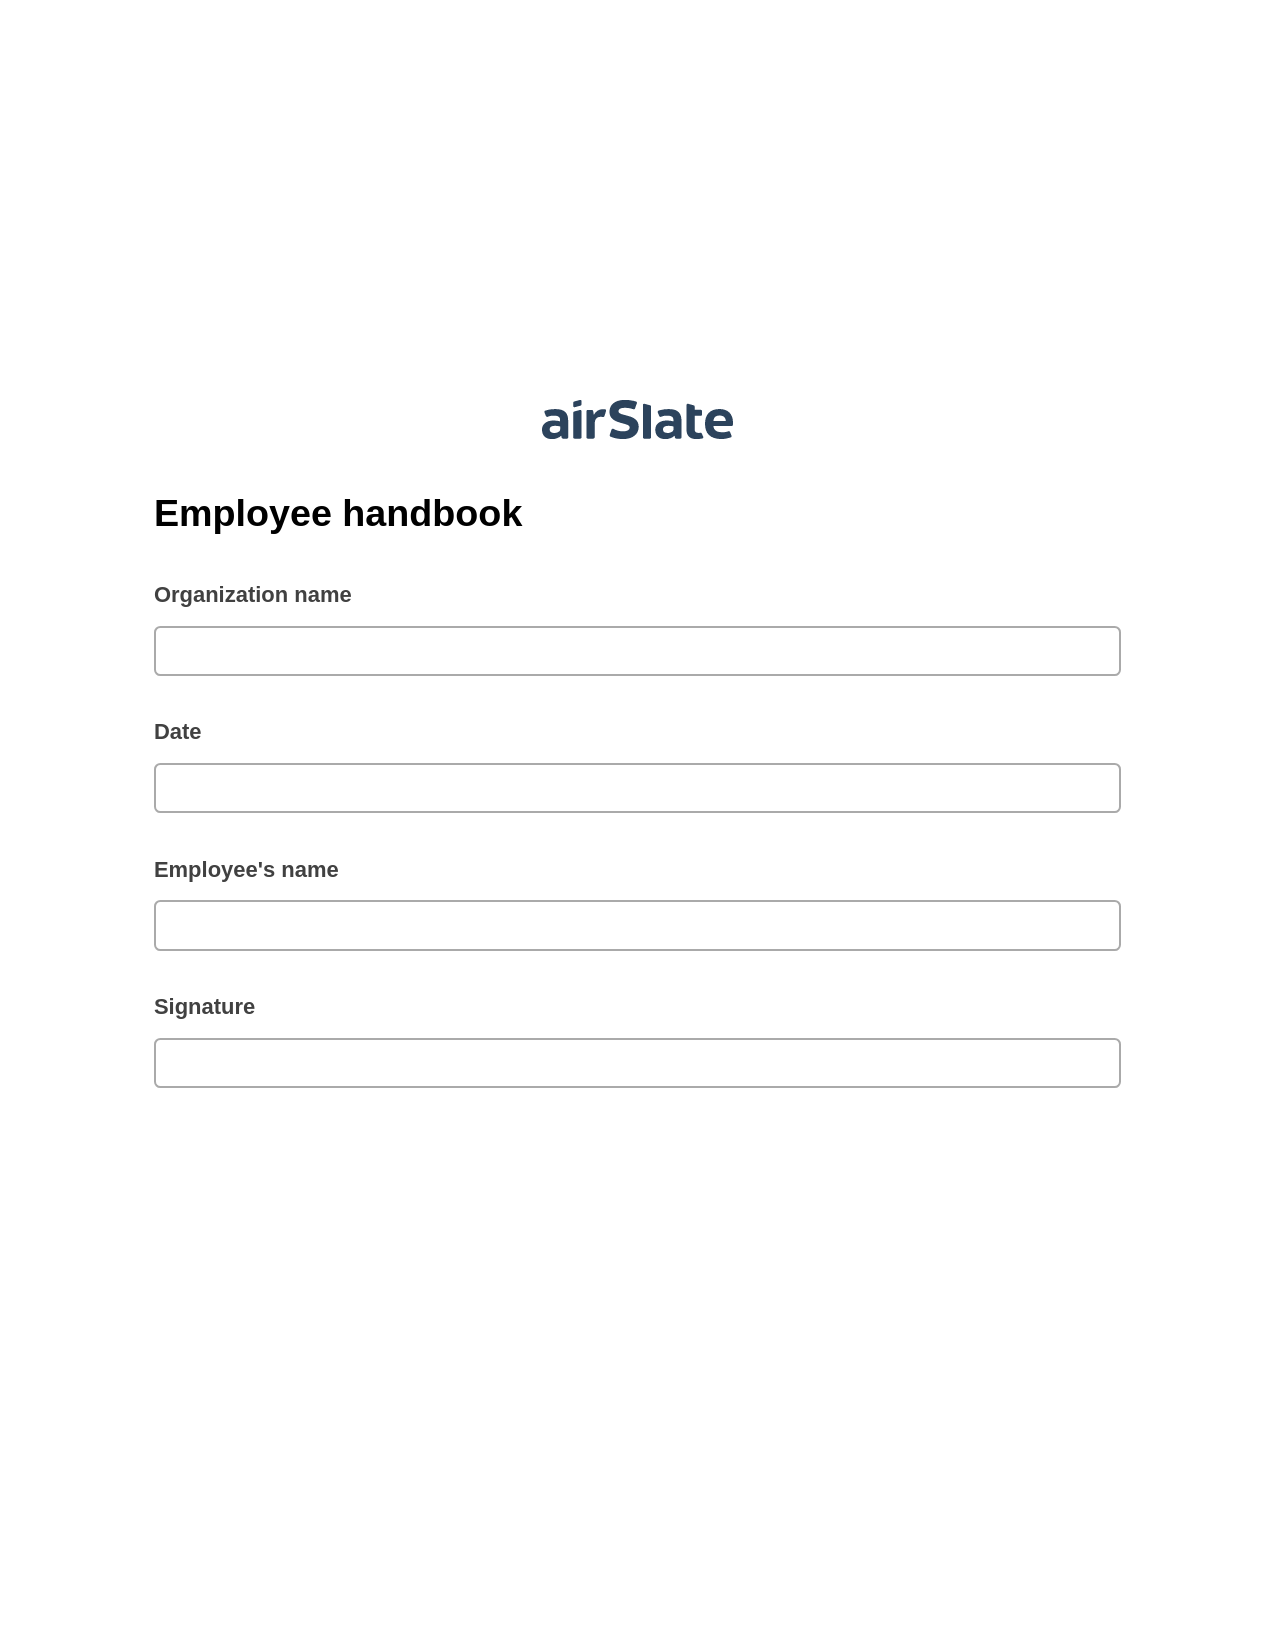 Employee handbook Pre-fill Document Bot, Slack Notification Bot, Google Drive Bot